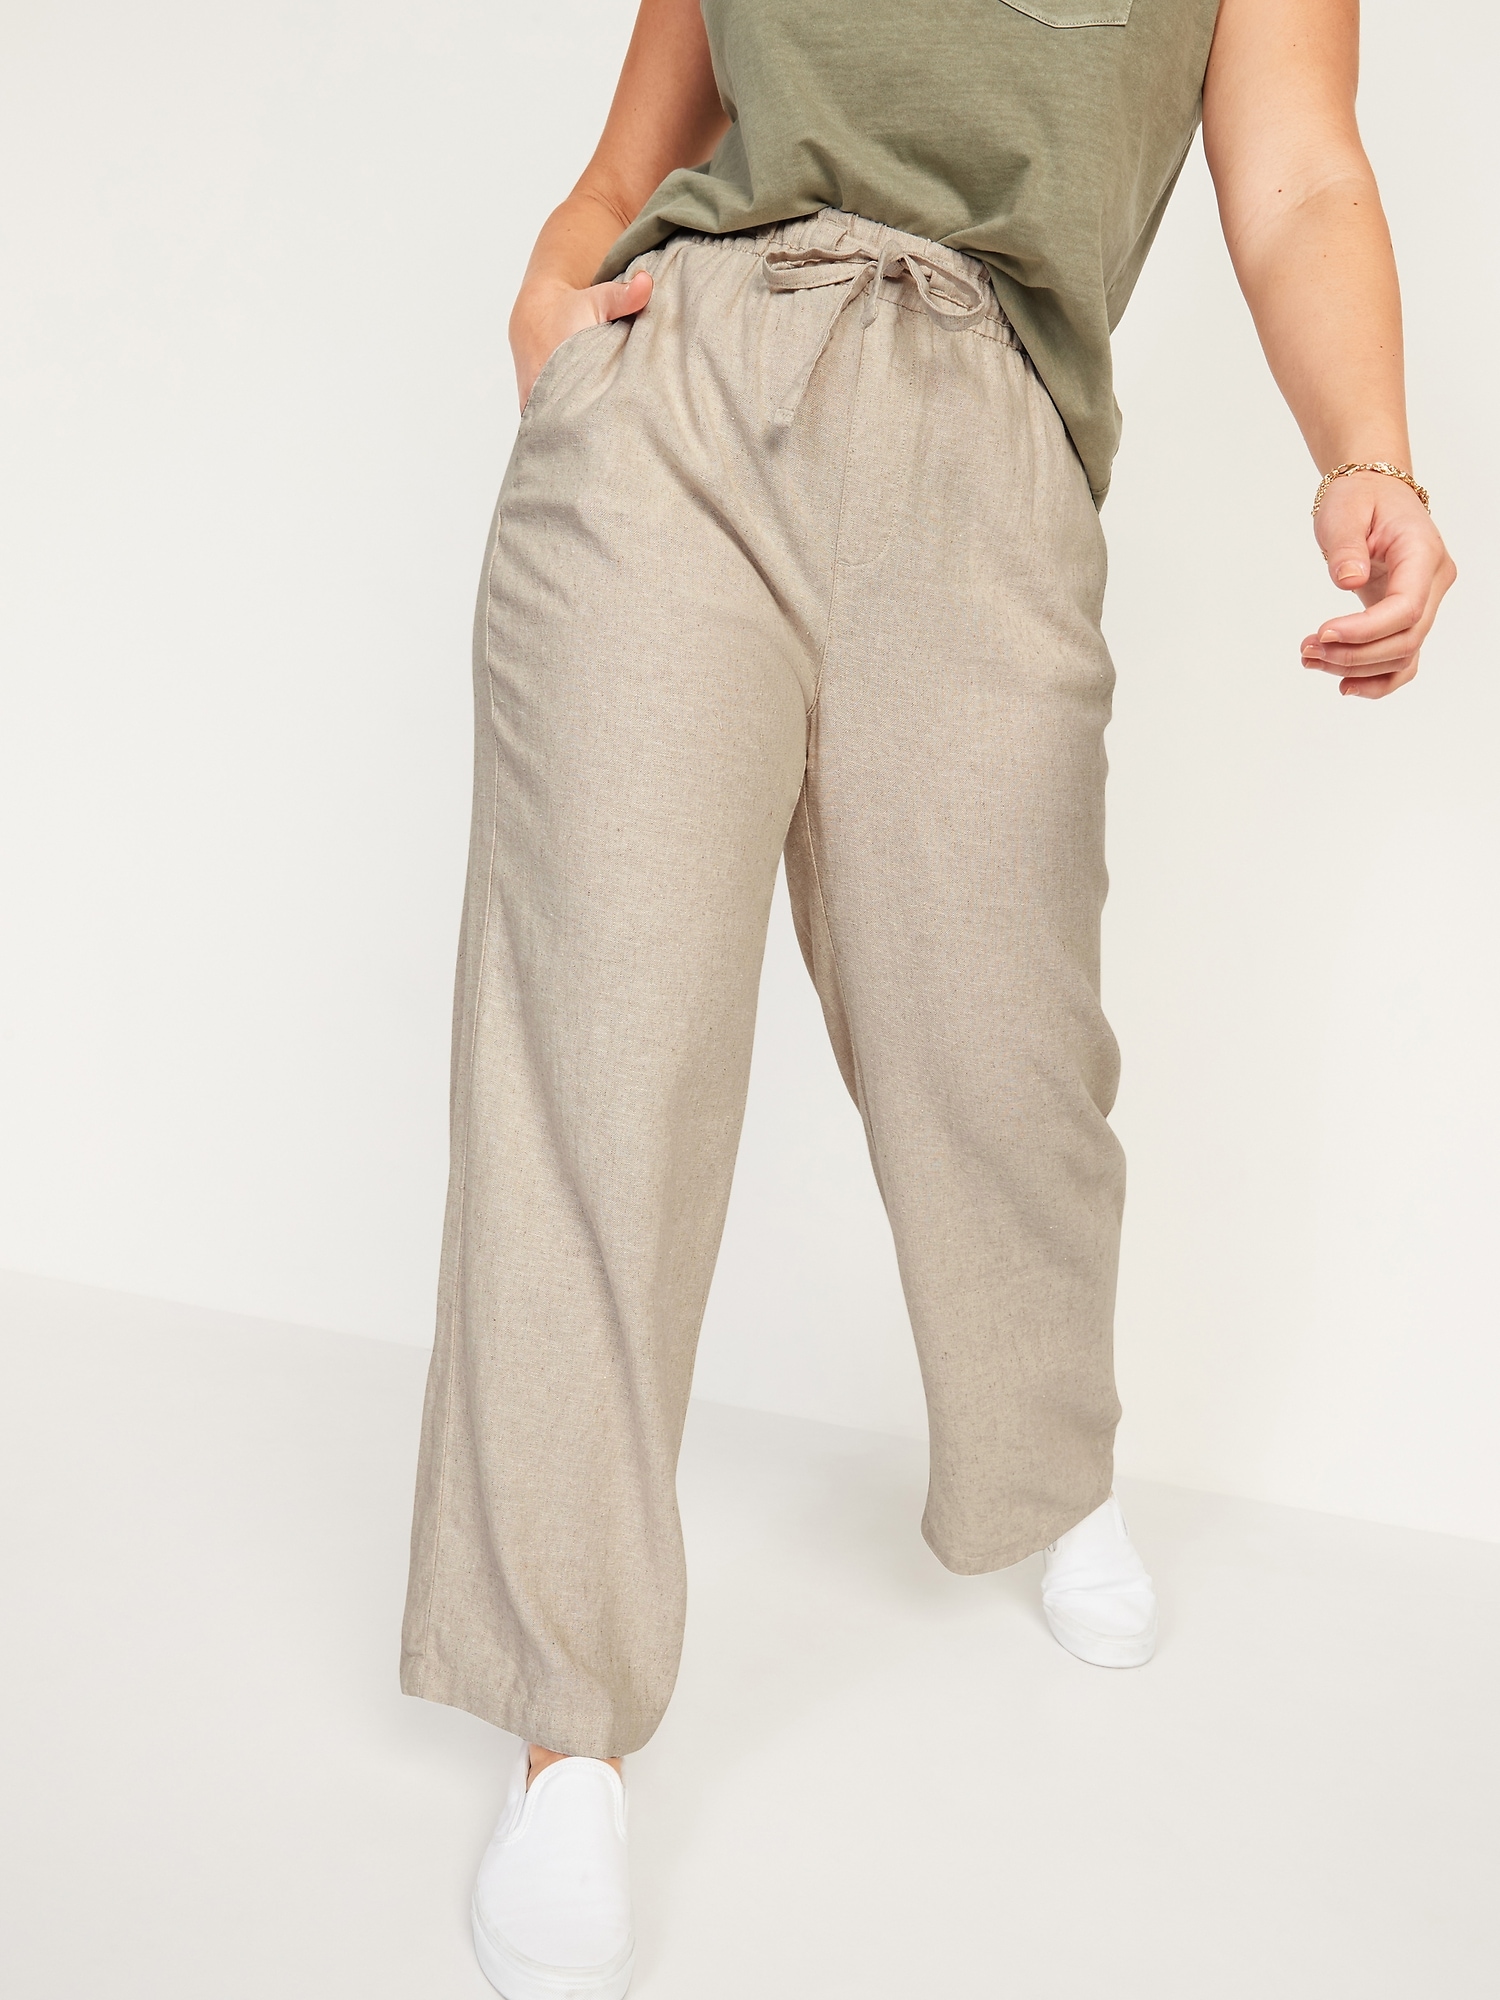 Buy Old Navy High-Waisted Linen-Blend Wide-Leg Pants for Women